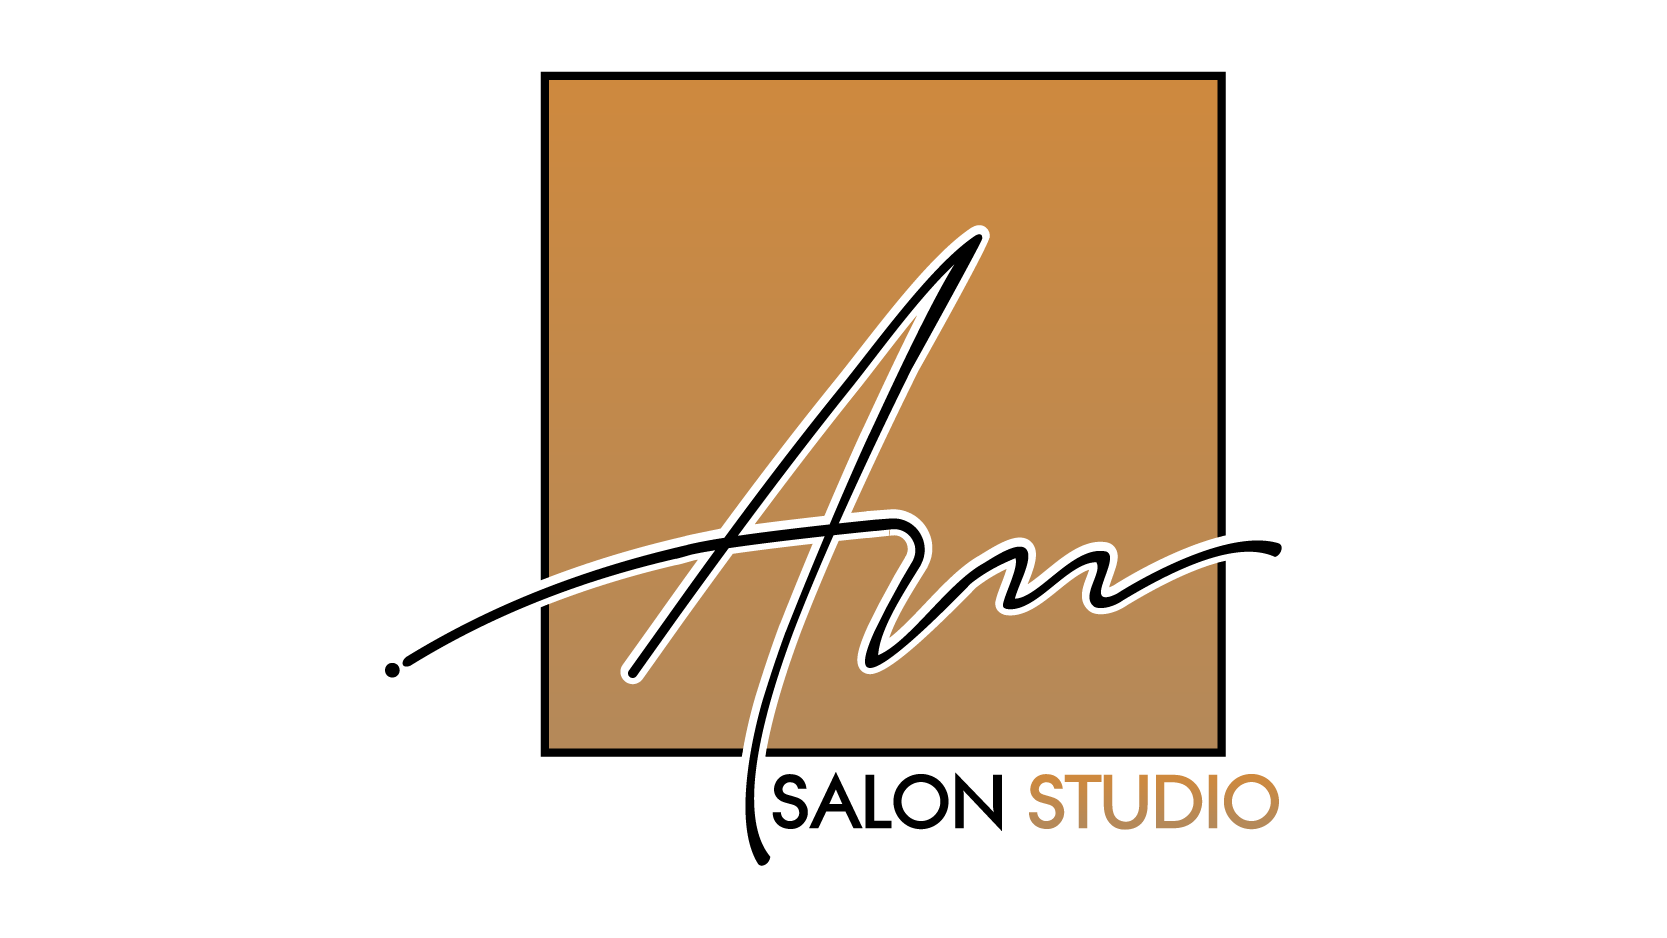 AM Salon Studio